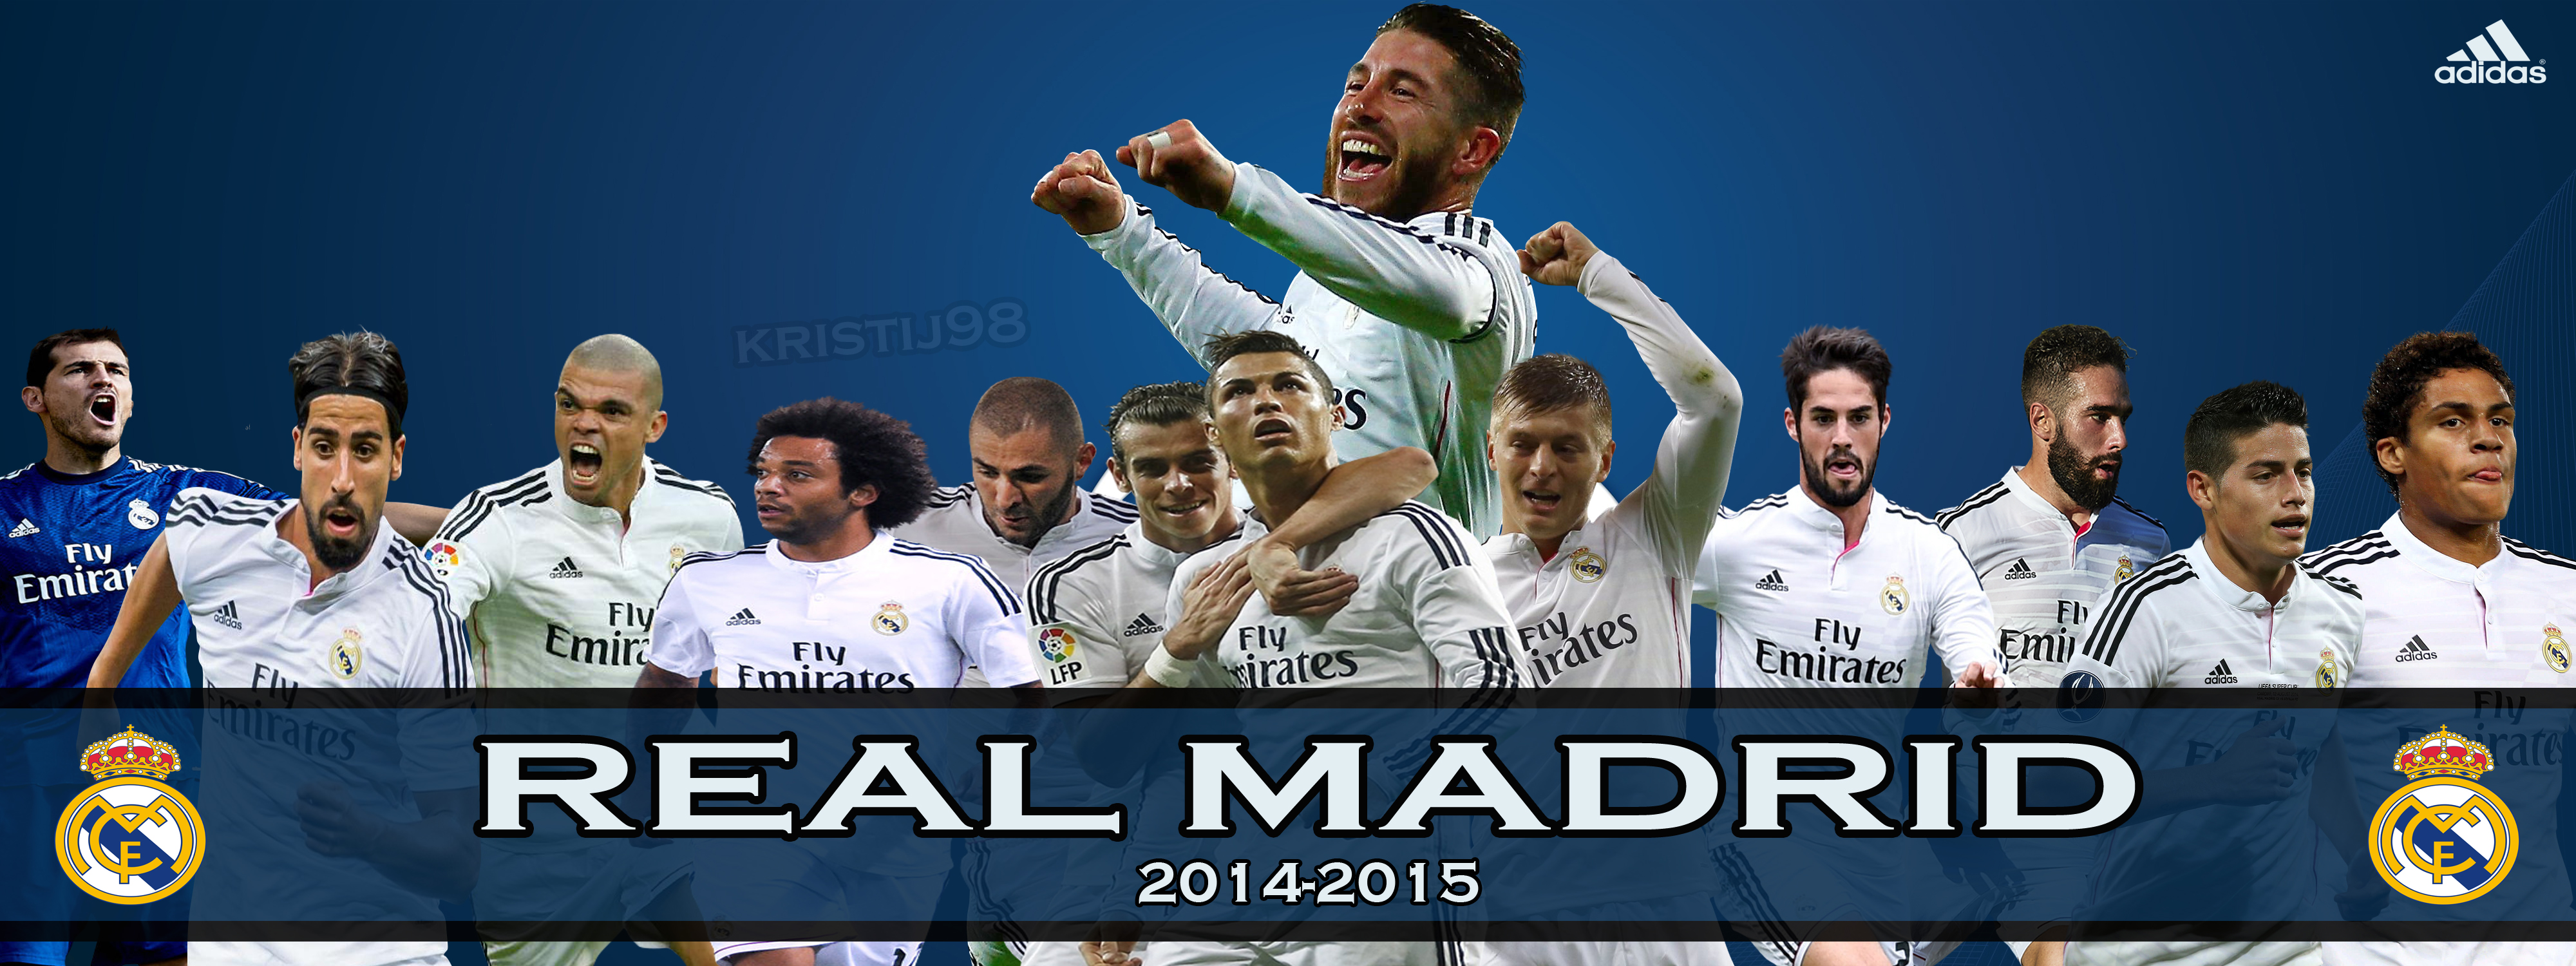 Real Madrid Wallpaper On